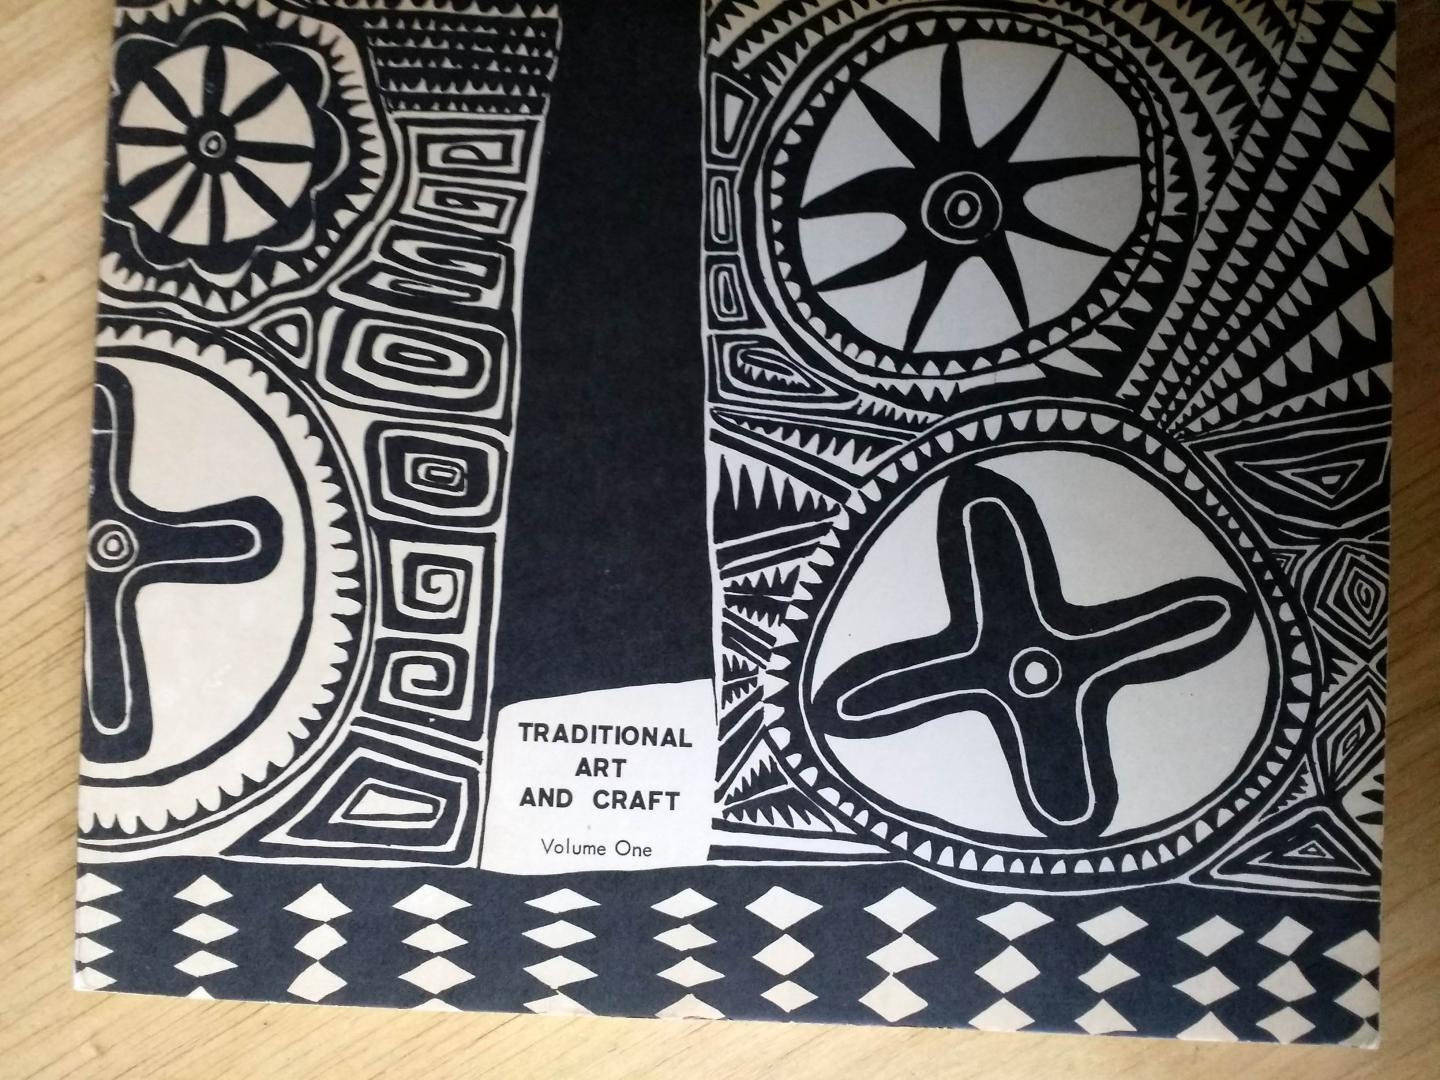 Madang teachers College - Tradtional art and craft (Papua New Guinea)